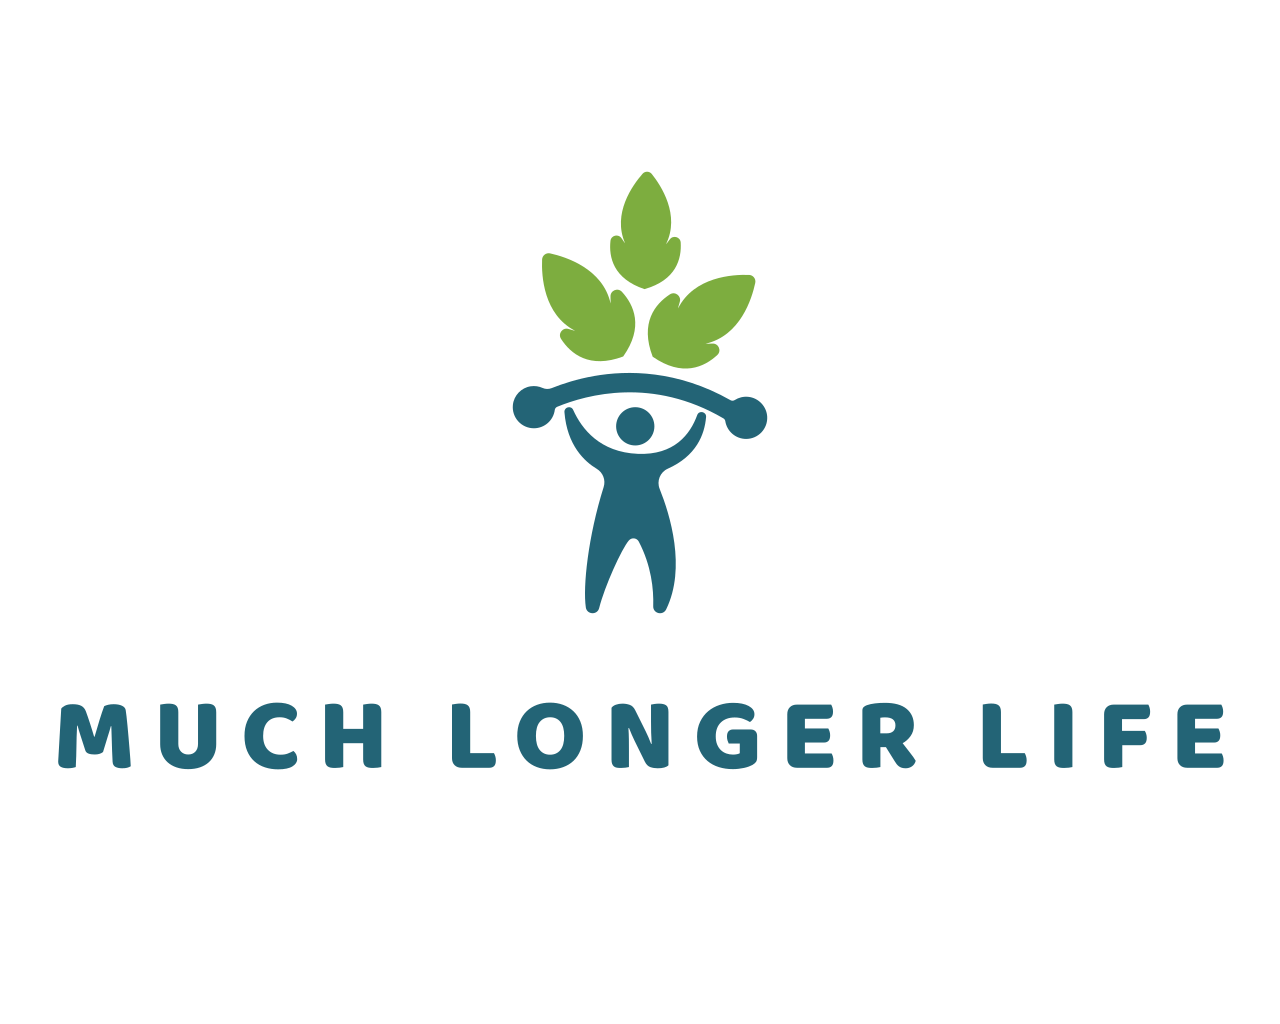 Much Longer Life